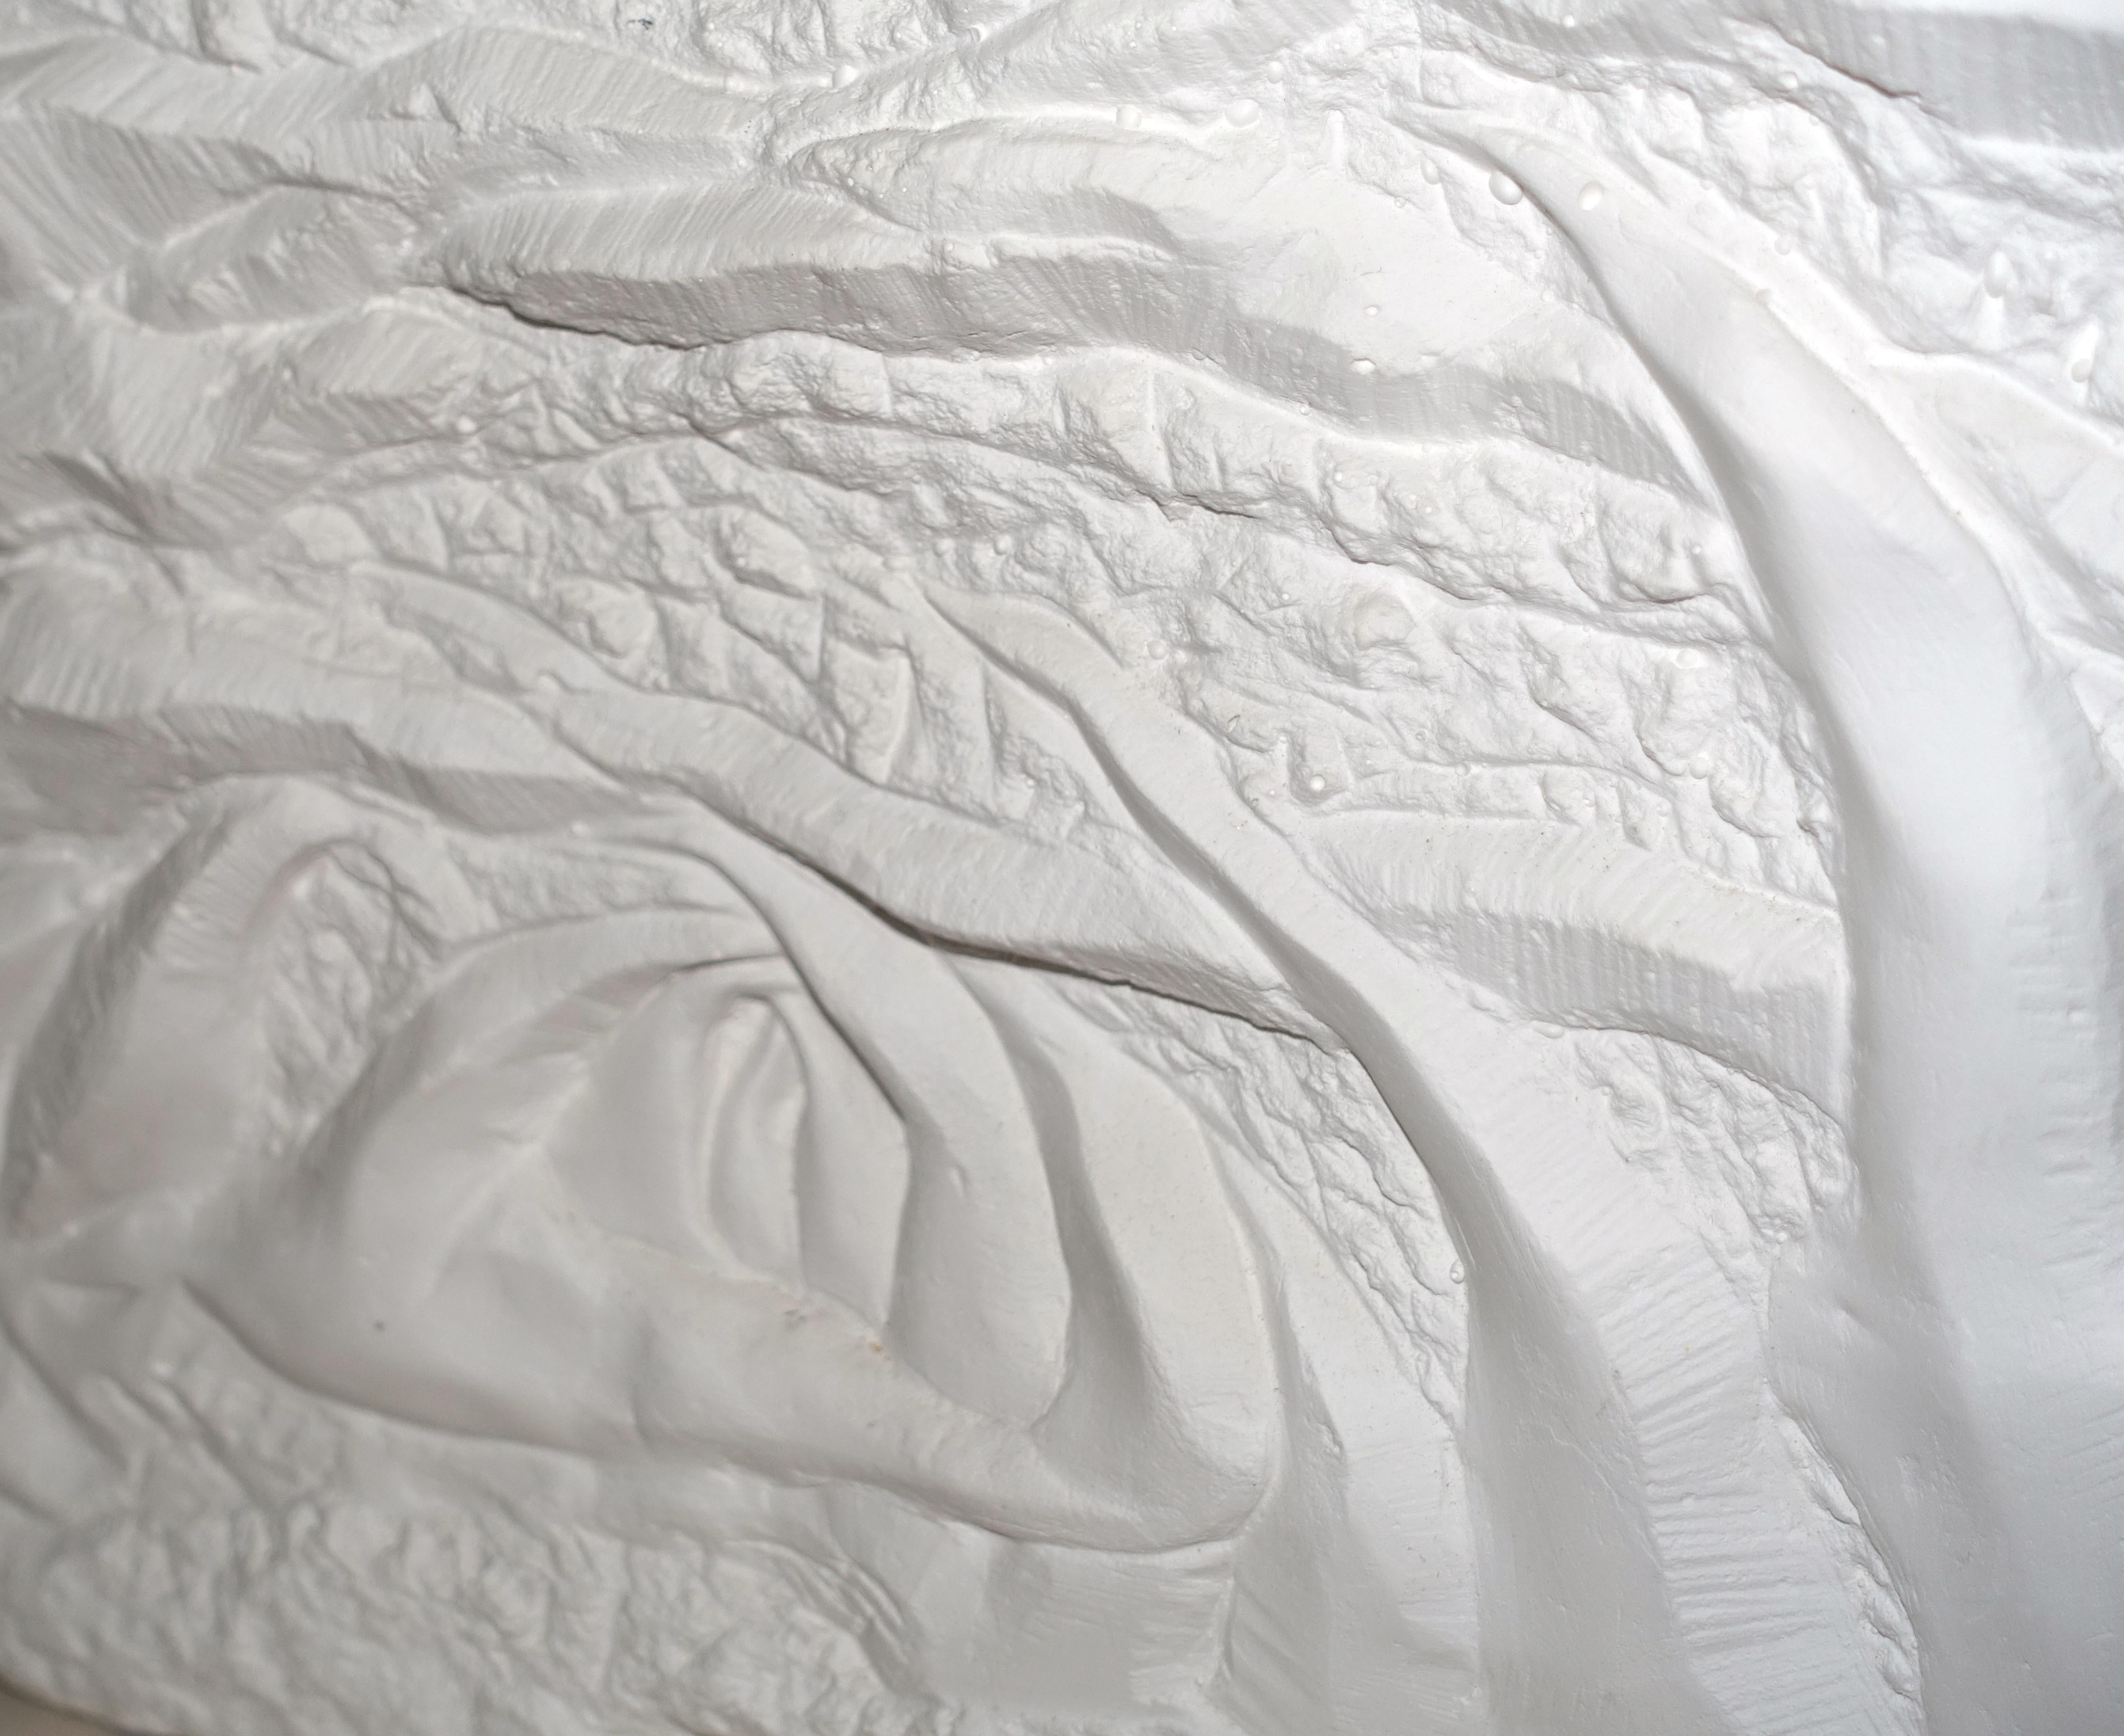 Fertile Sea: weiße abstrakte Reliefskulptur des Ozeans, an Wand oder Regal montiert (Grau), Figurative Sculpture, von Ava Blitz